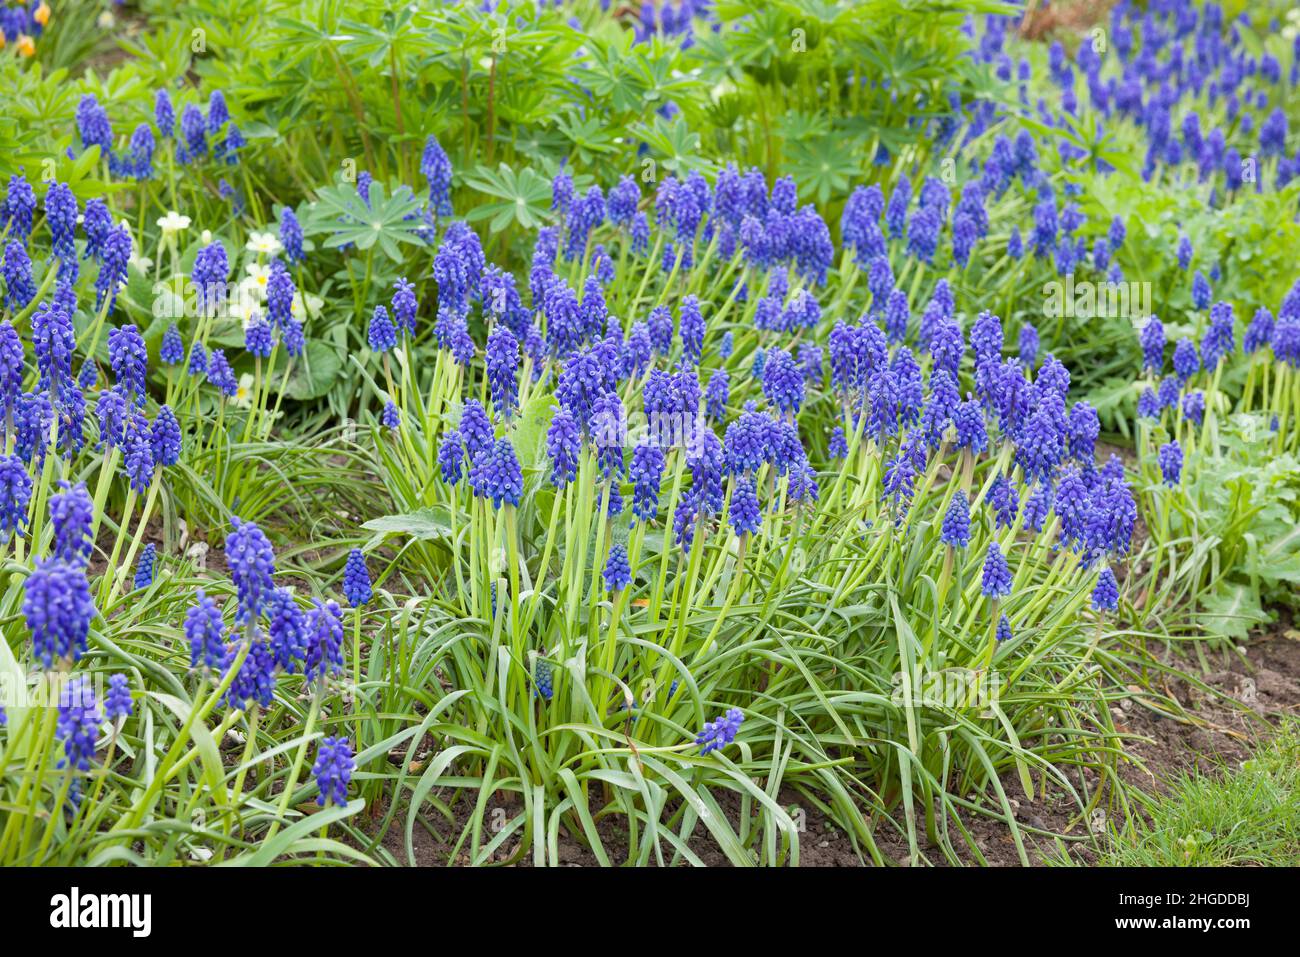 Muscari flowers, (grape hyacinth, muscari armeniacum,) bulb plants flowering in spring in a UK garden border Stock Photo